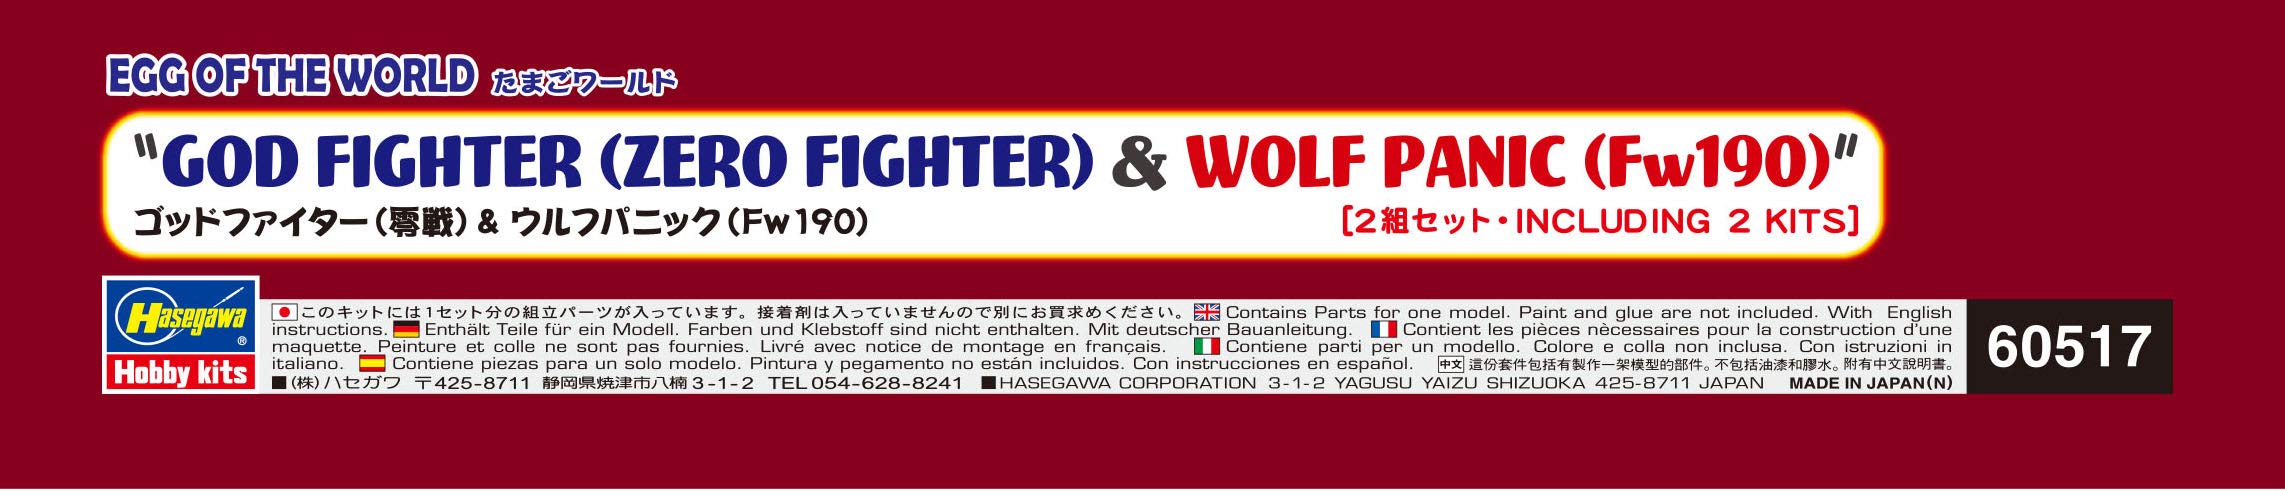 HASEGAWA 60517 Egg World God Fighter Zero Fighter & Wolf Panic Fw190